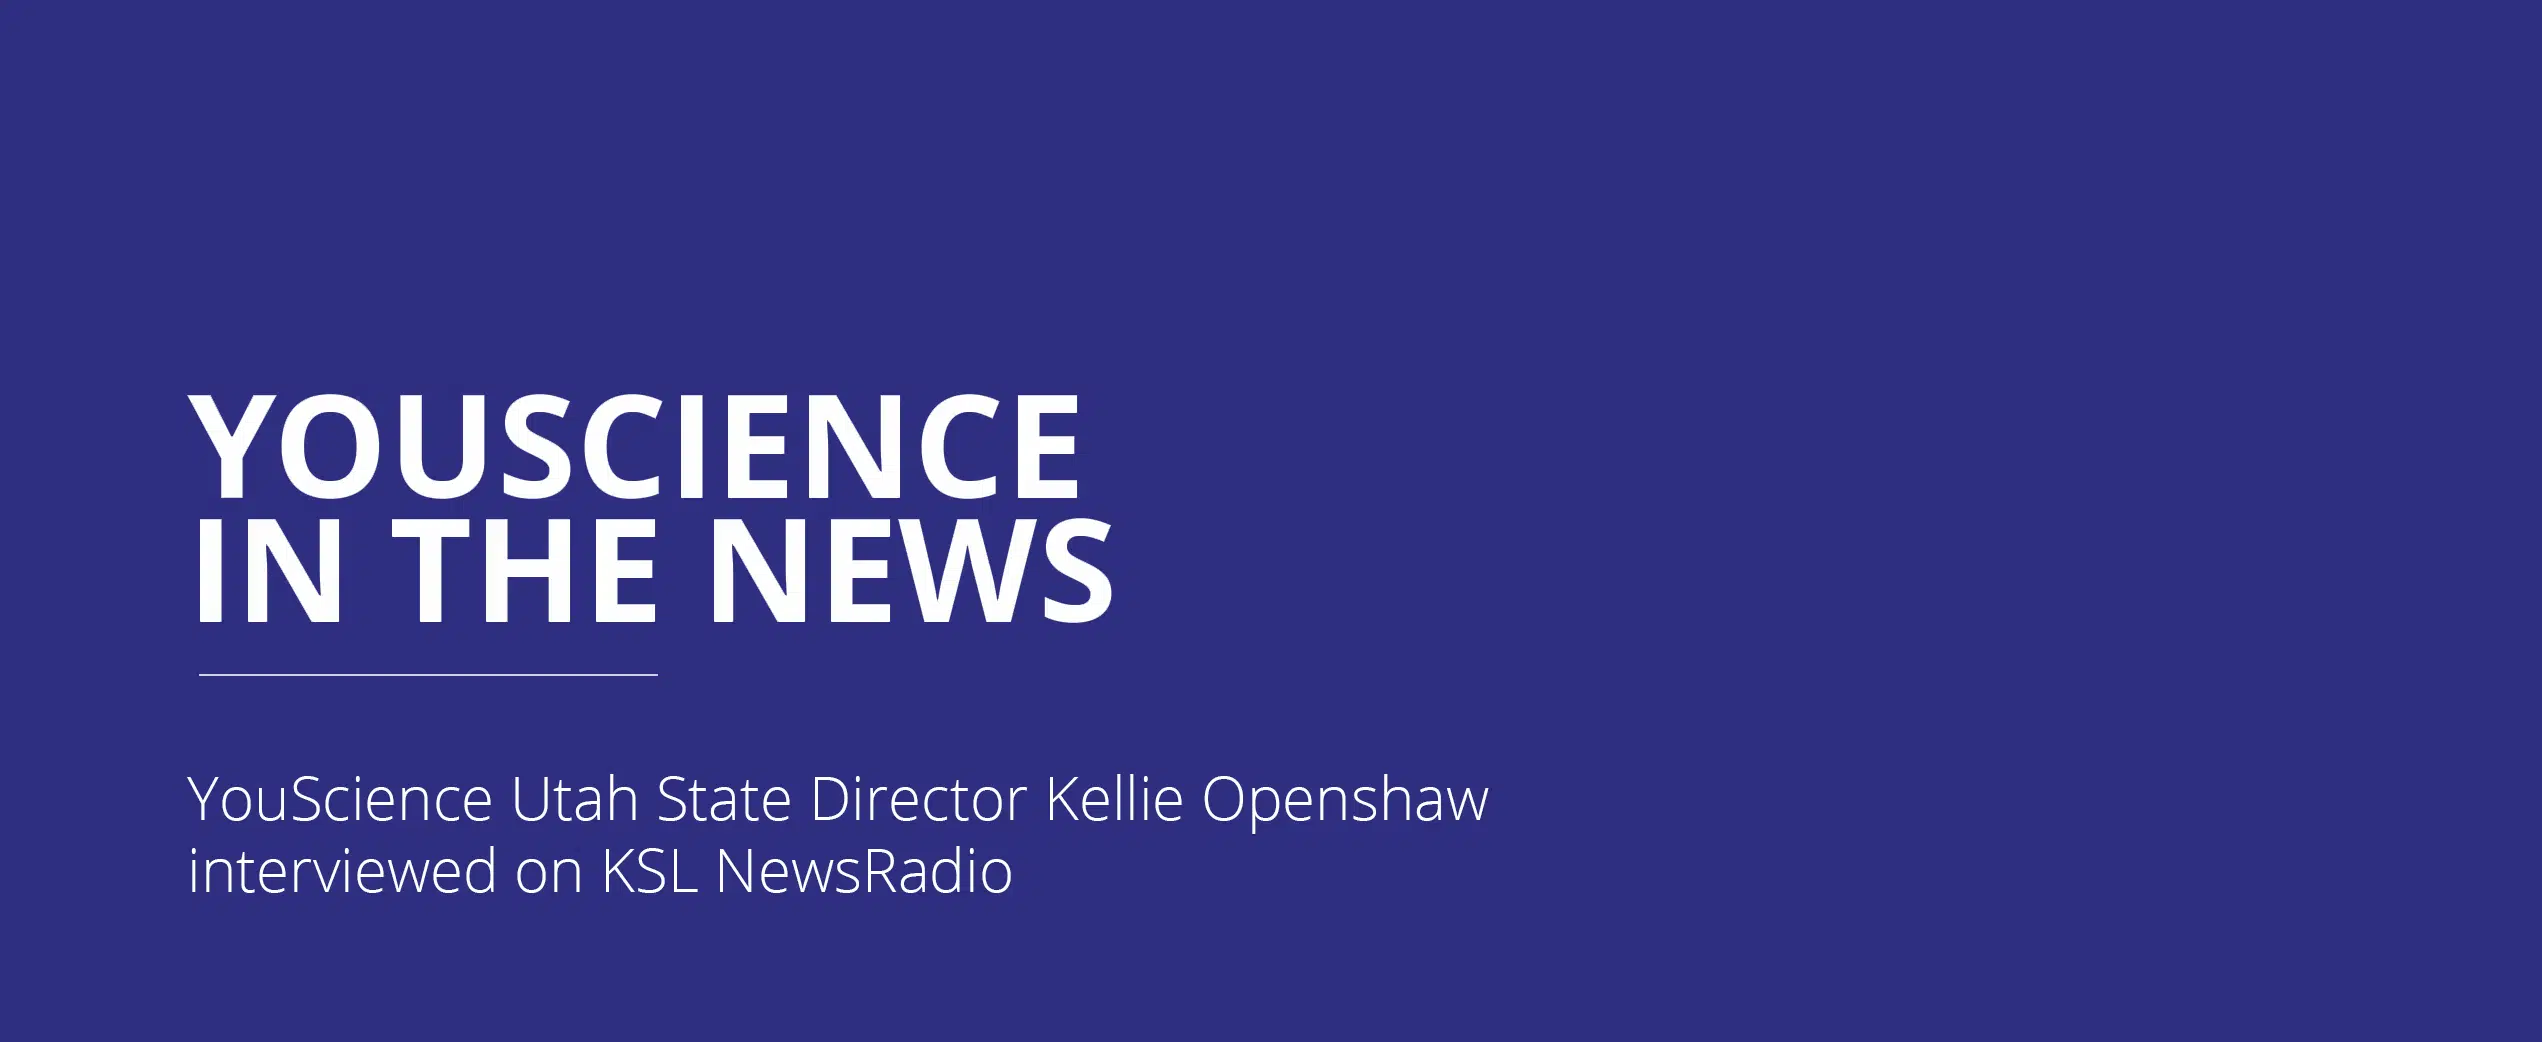 YouScience Utah State Director Kellie Openshaw interviewed on KSL NewsRadio